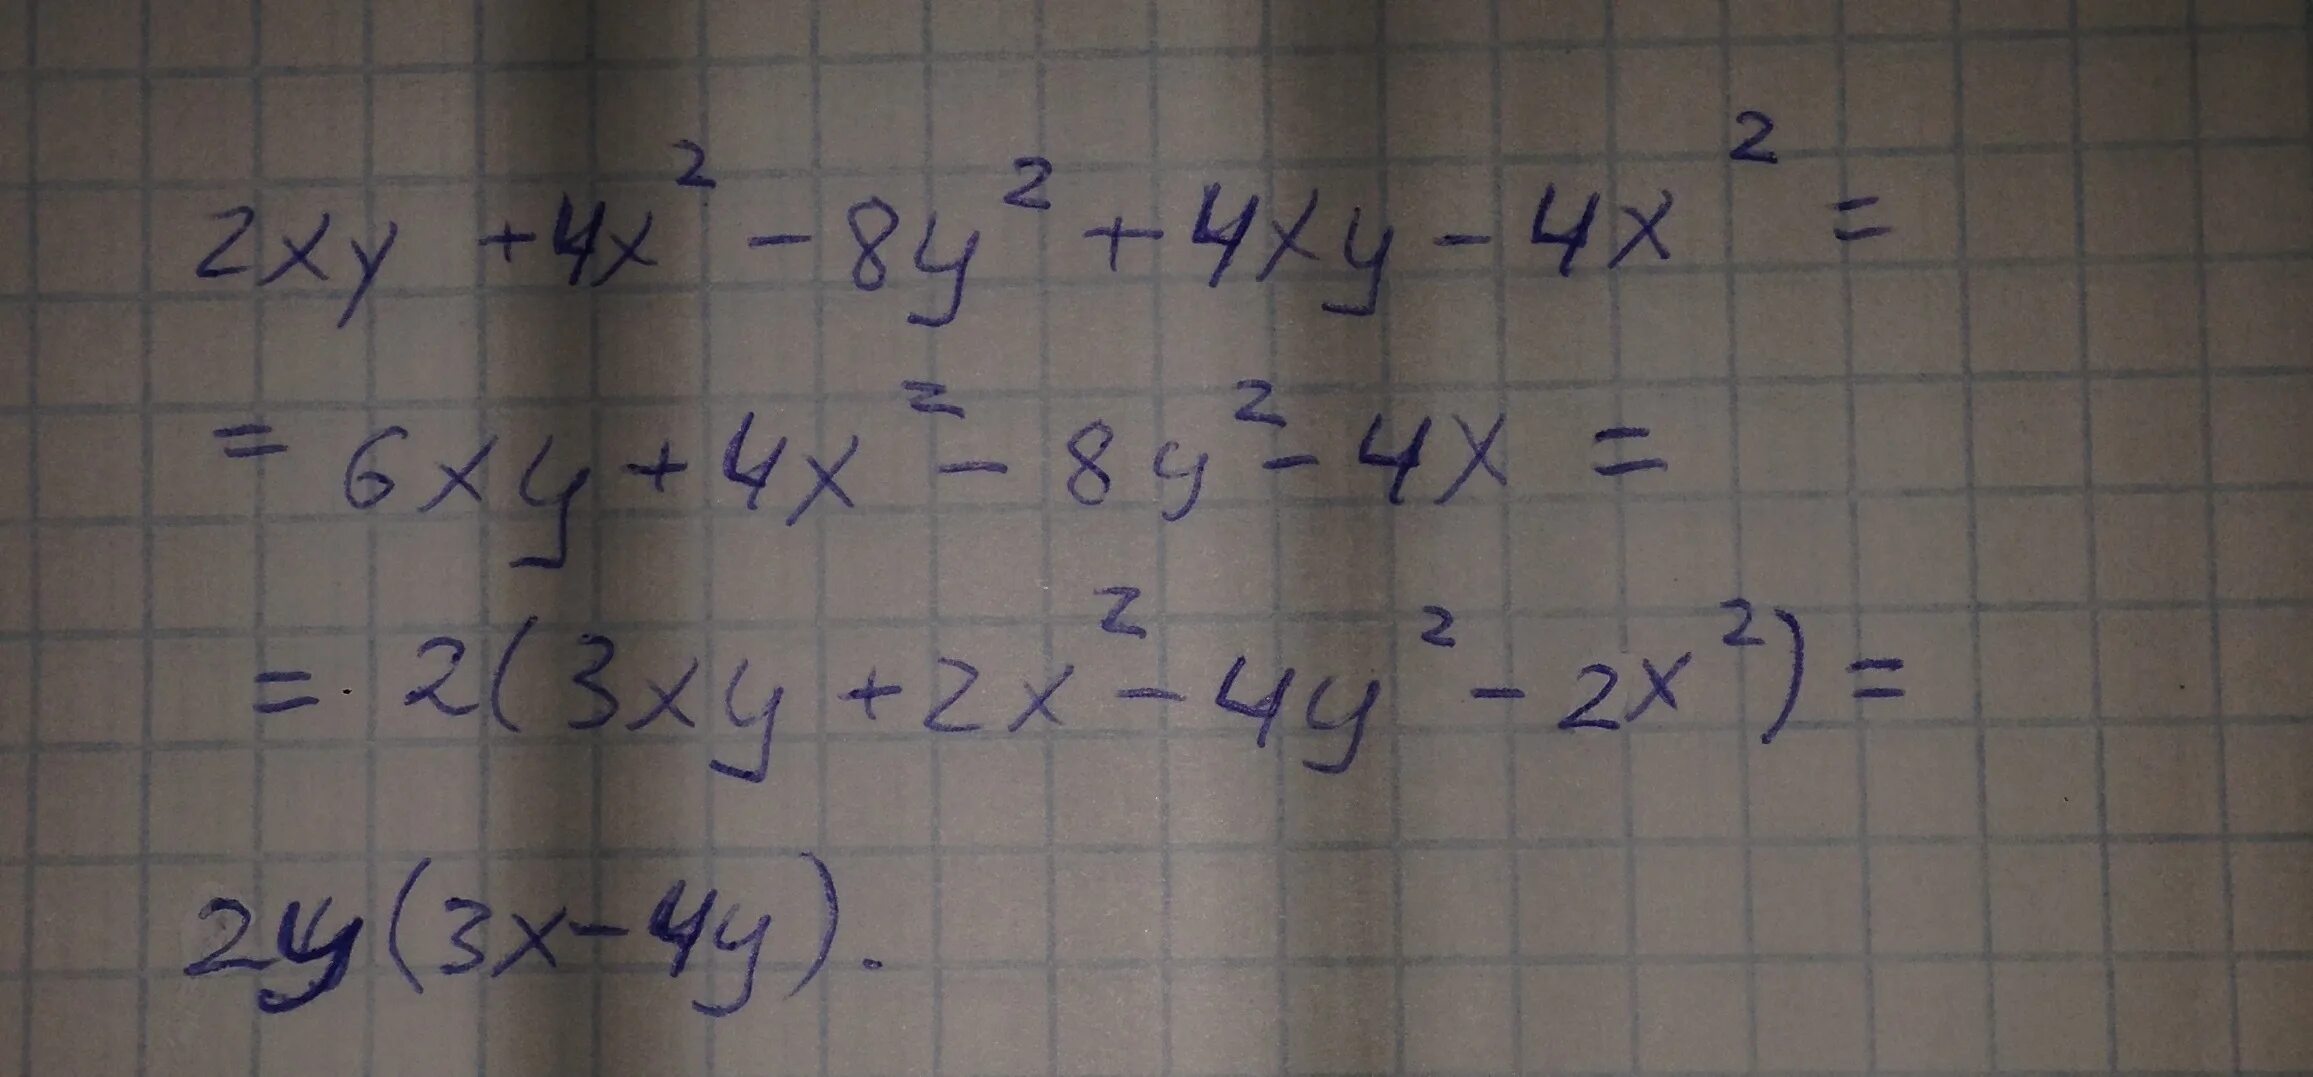 X во второй x в третий. X-2 В 4 степени. 2 В степени x. Решение во второй степени. Икс во 2 степени.